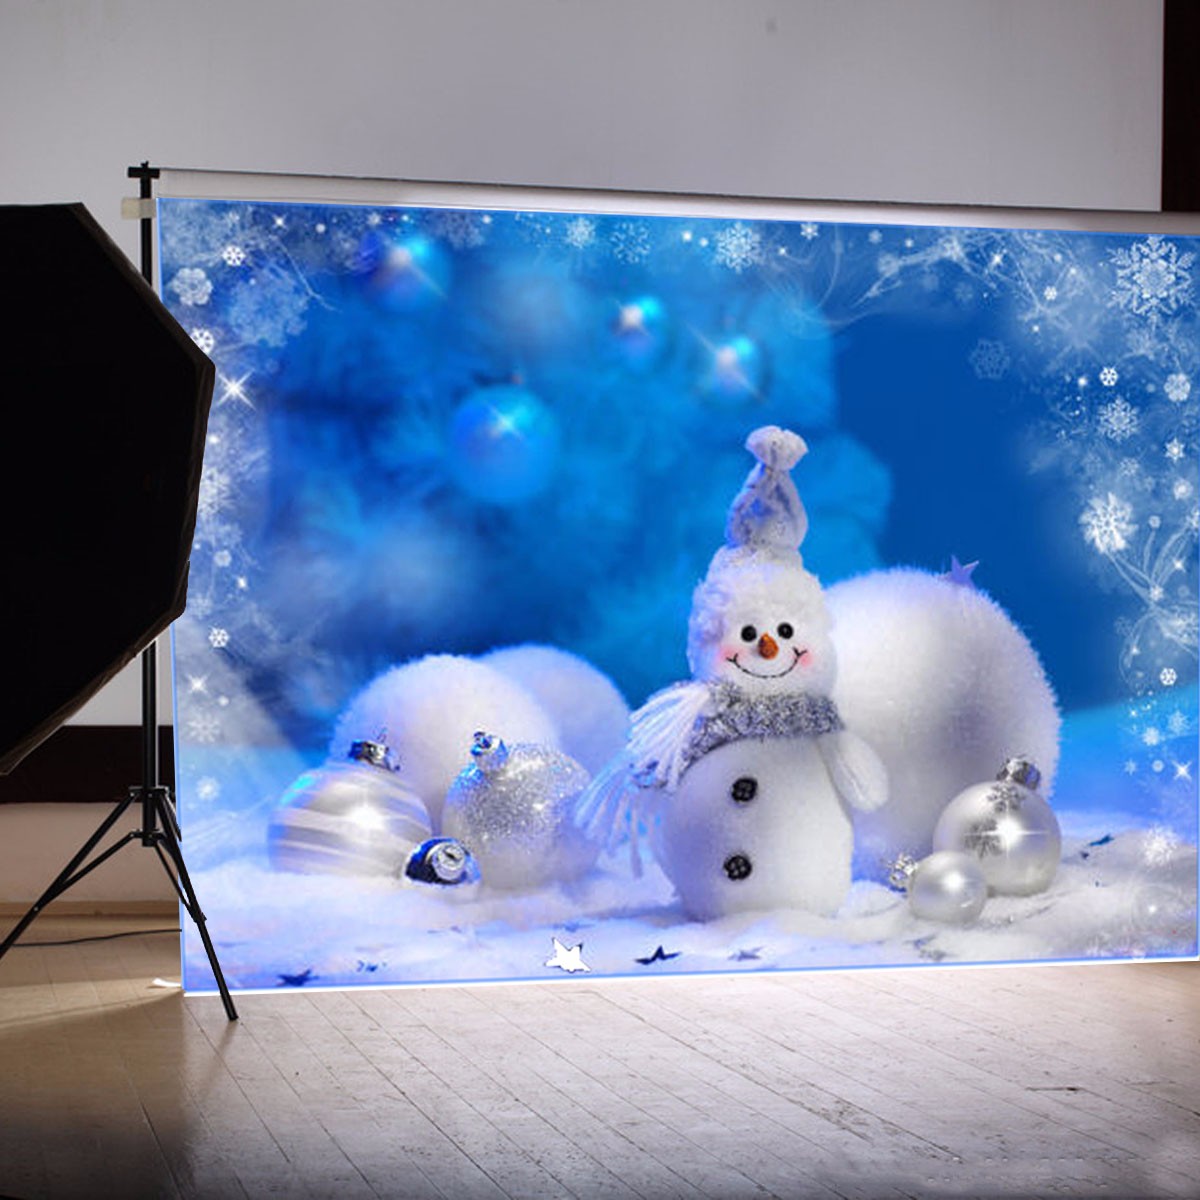 Vinyl-Fabric-Christmas-Snowman-Studio-Photography-Background-Backdrop-1104876-2